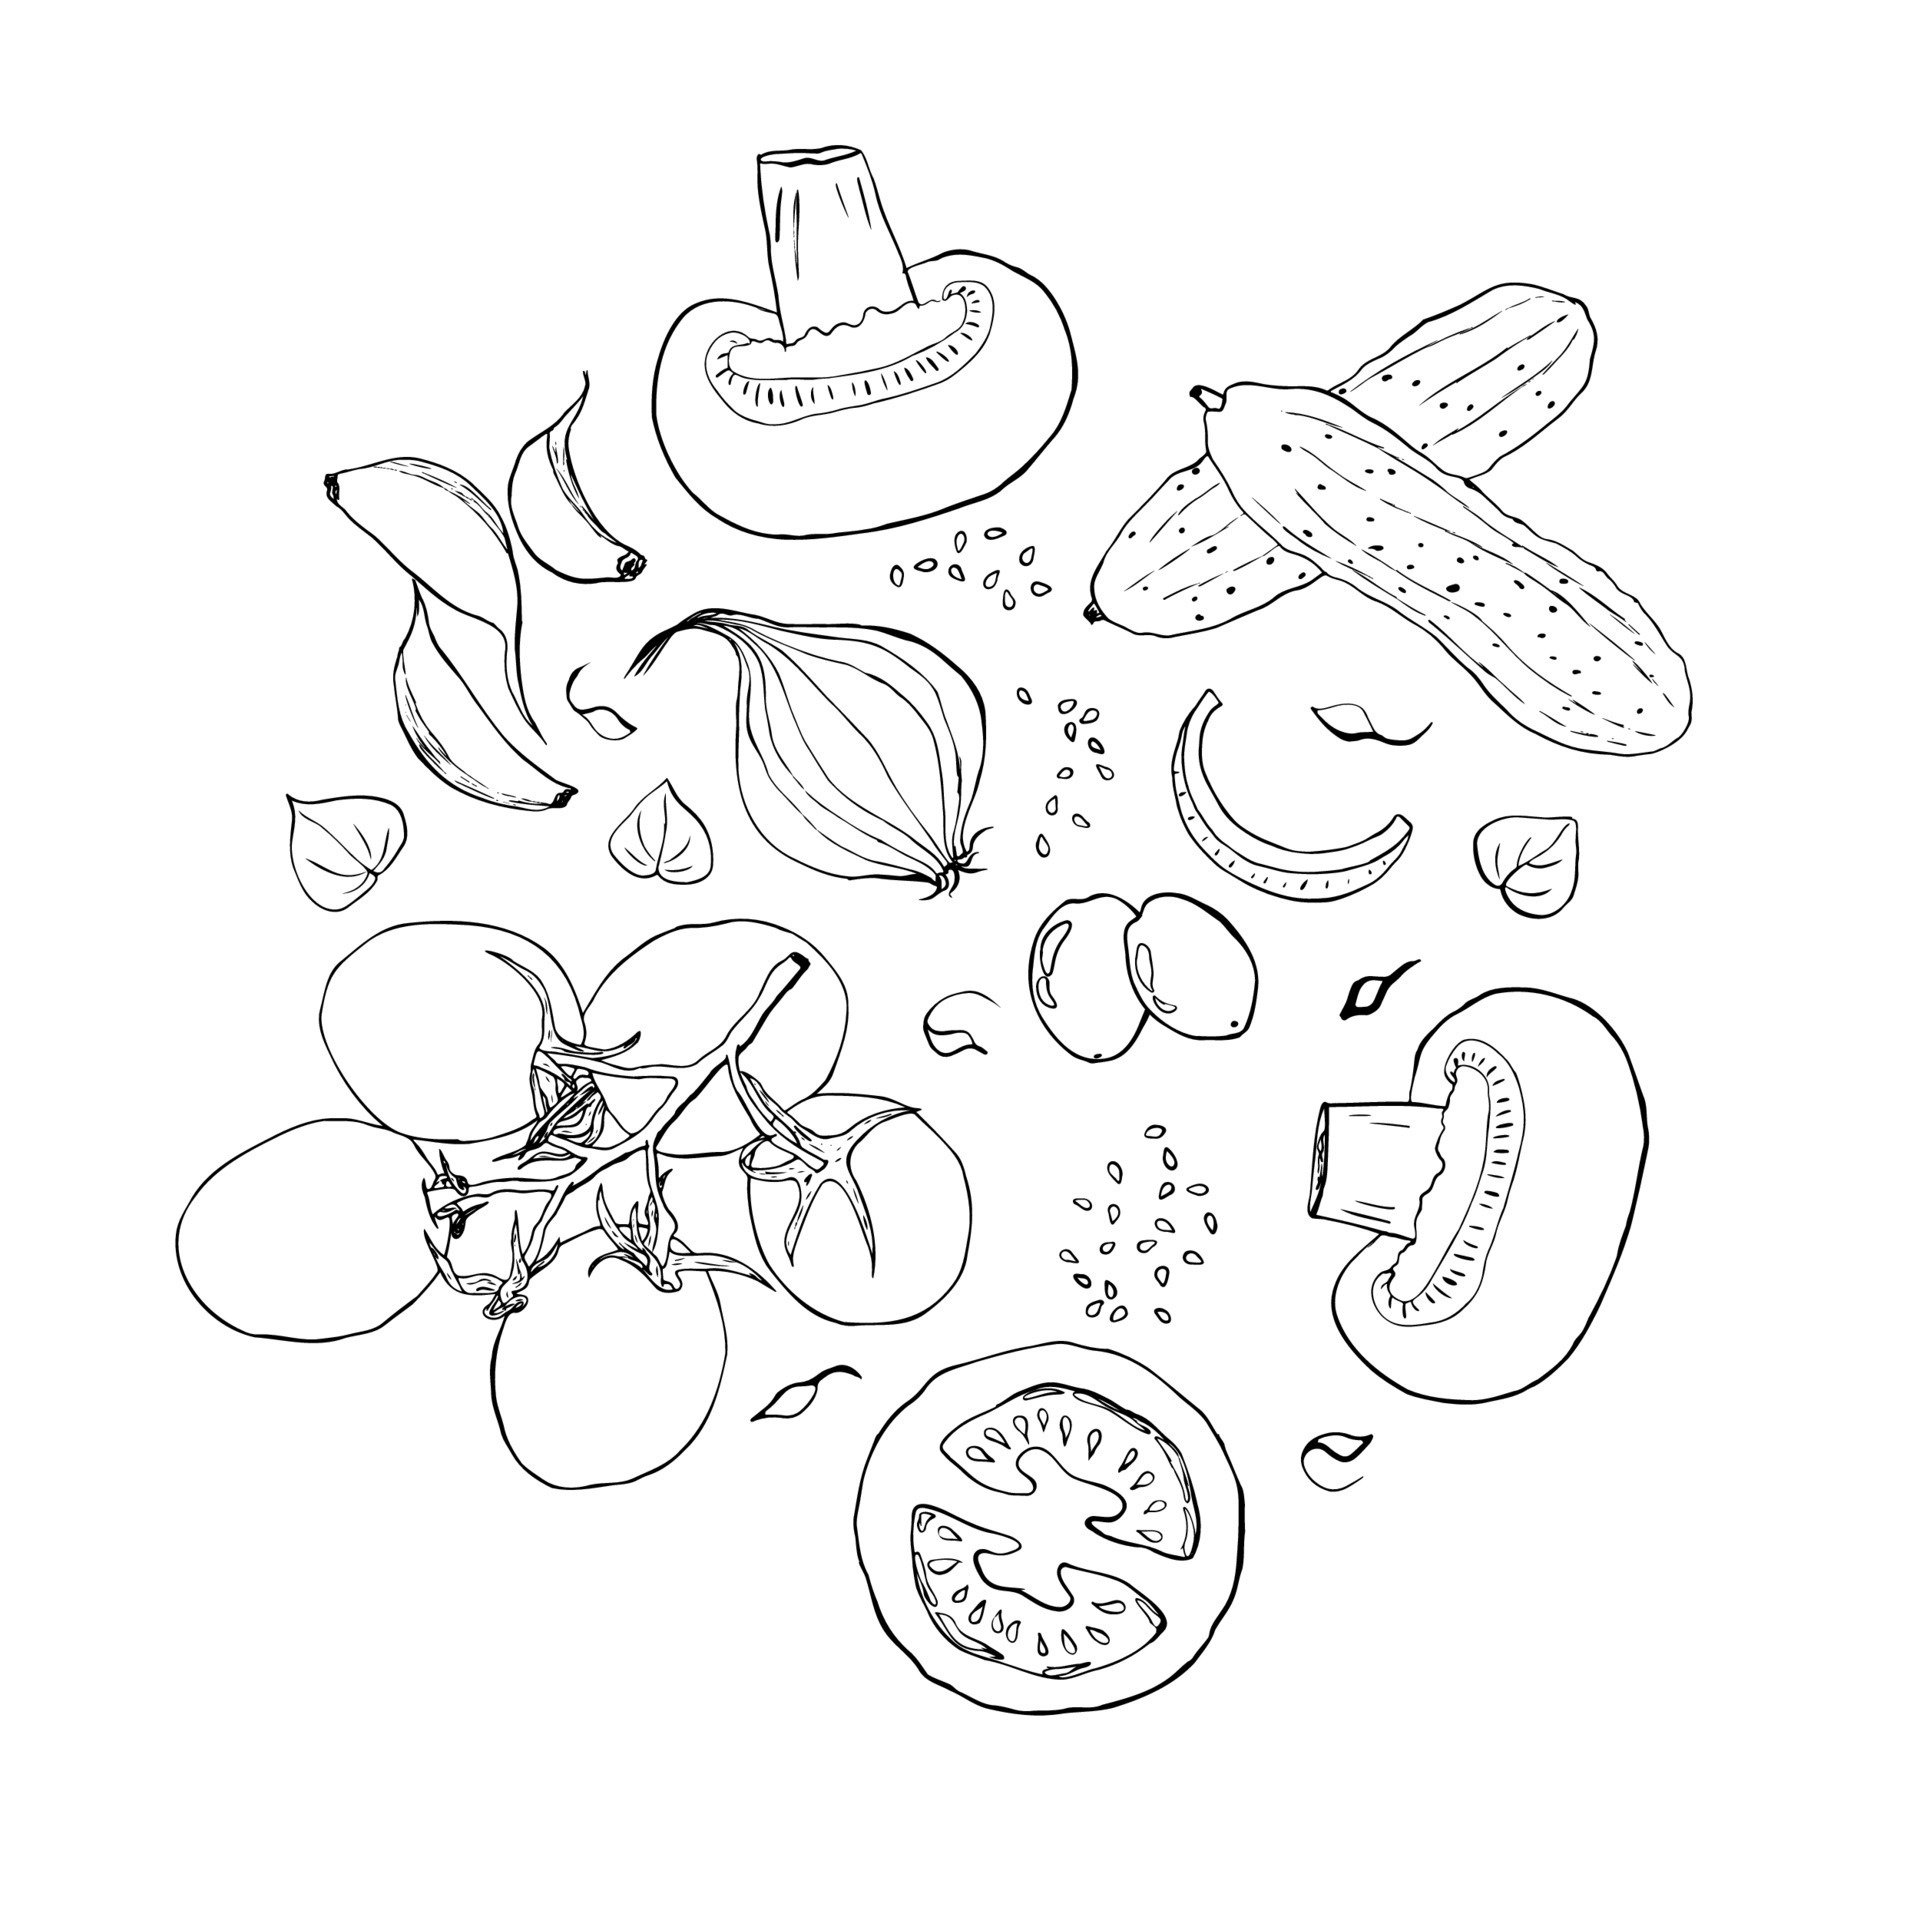 Vegetables drawing Vectors & Illustrations for Free Download | Freepik